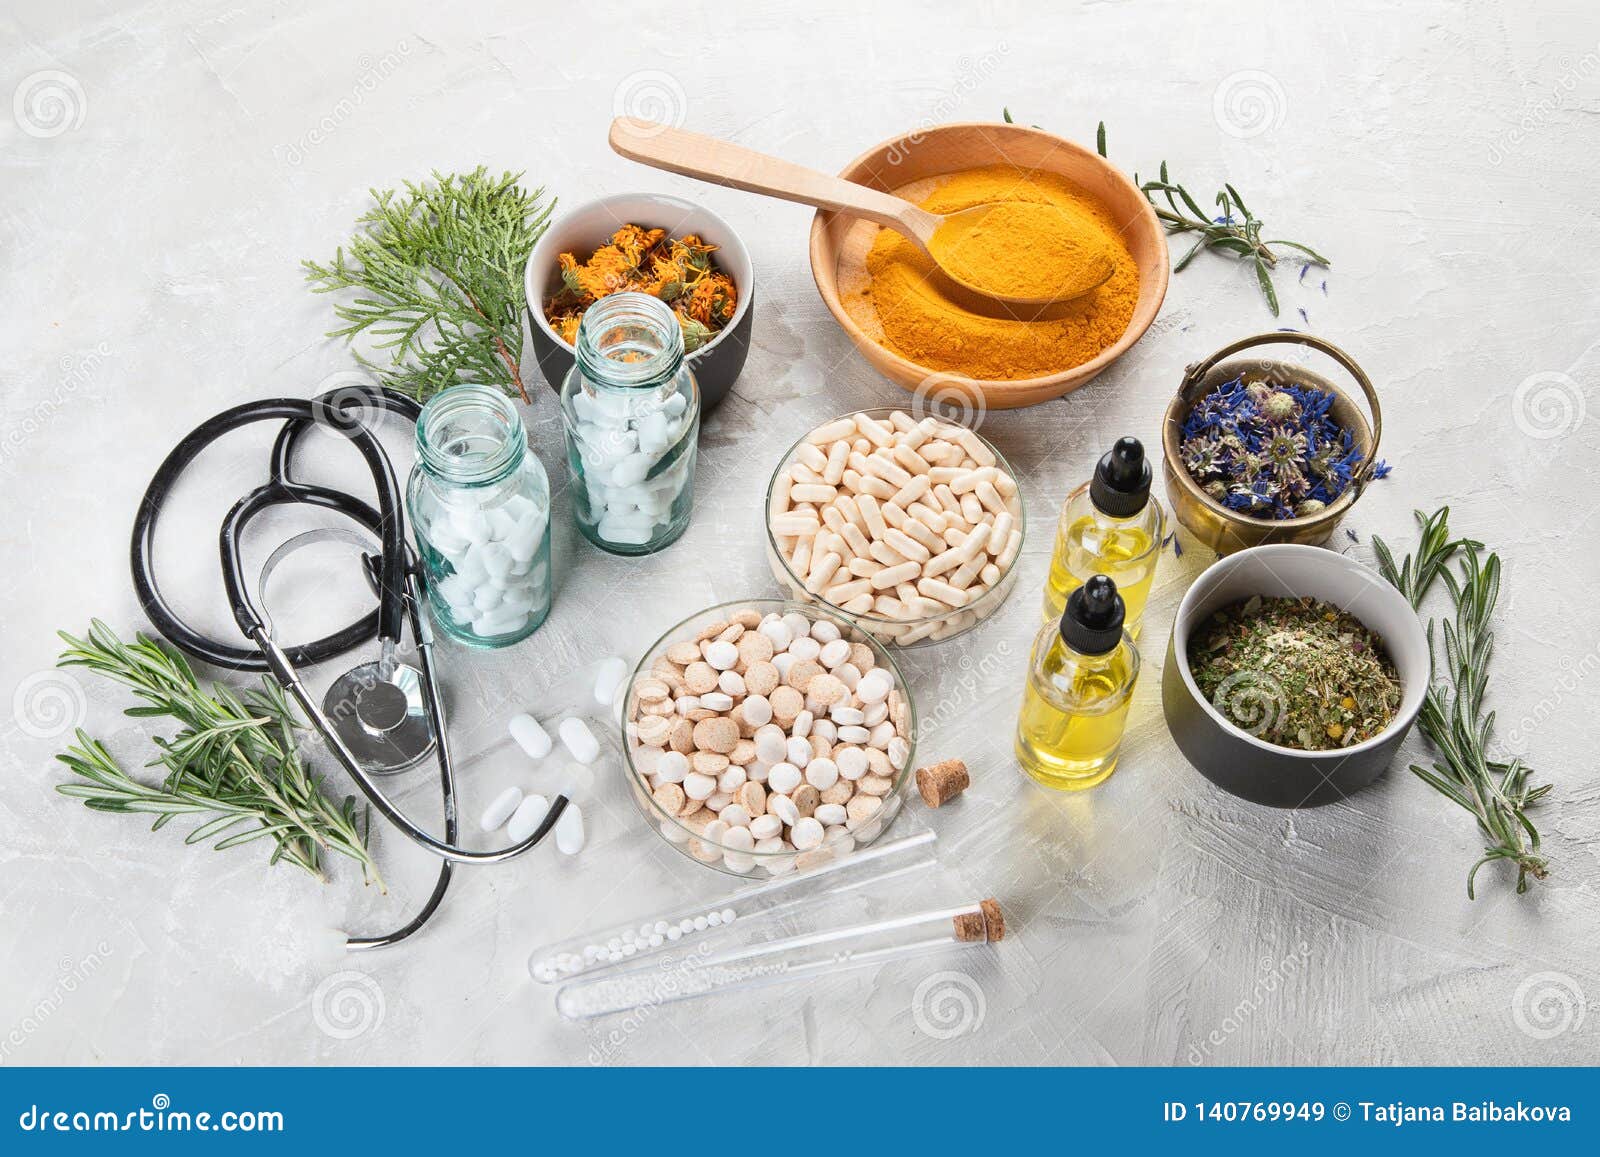 alternative medicine herbs and homeopathic globules